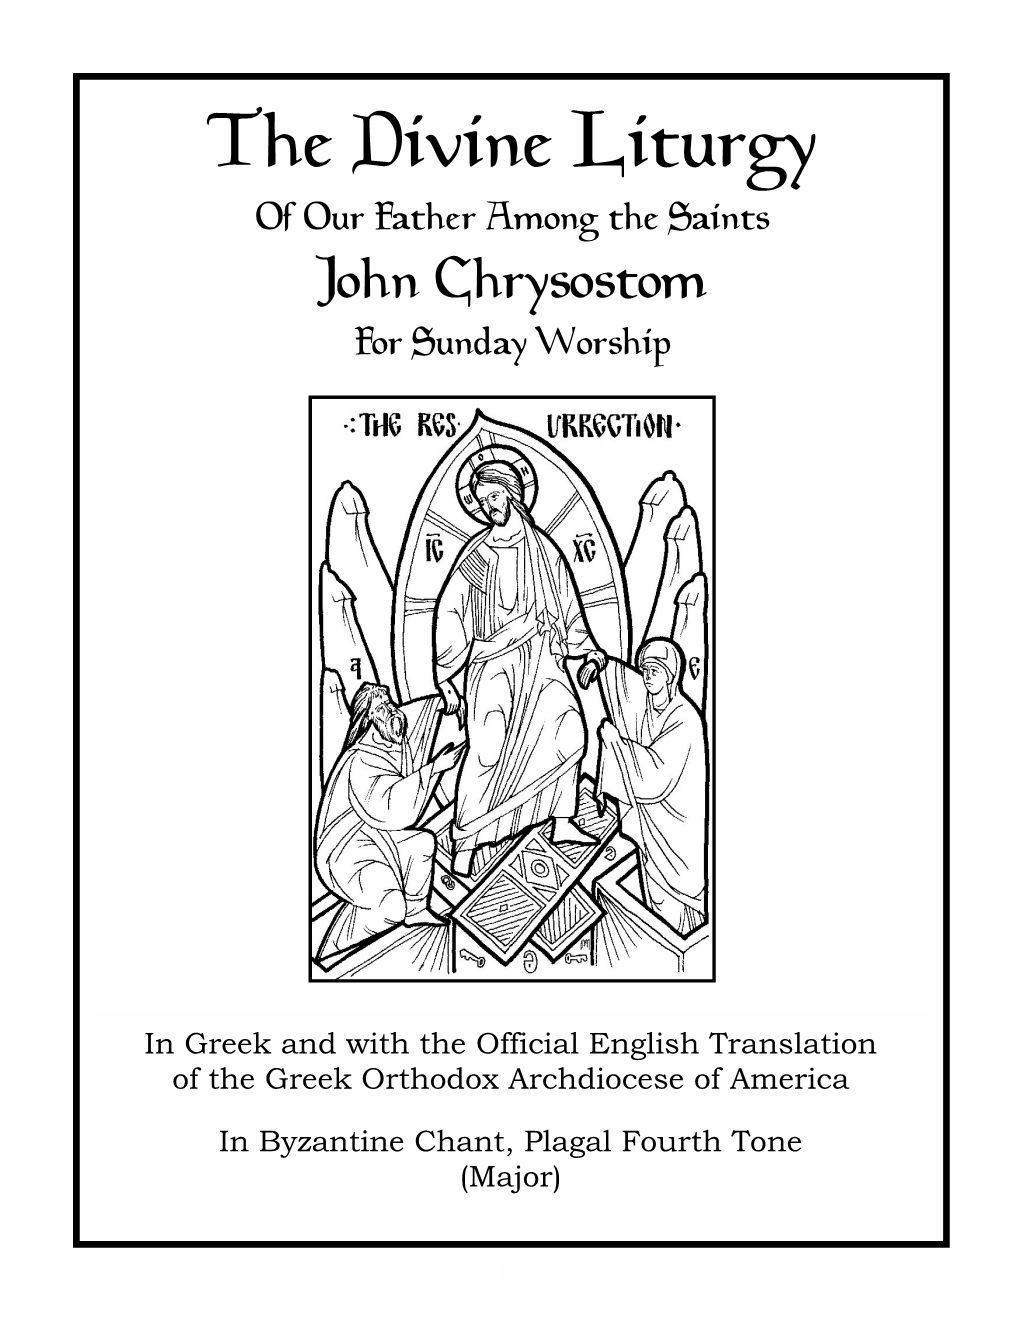 The Divine Liturgy of Our Father Among the Saints John Chrysostom for Sunday Worship